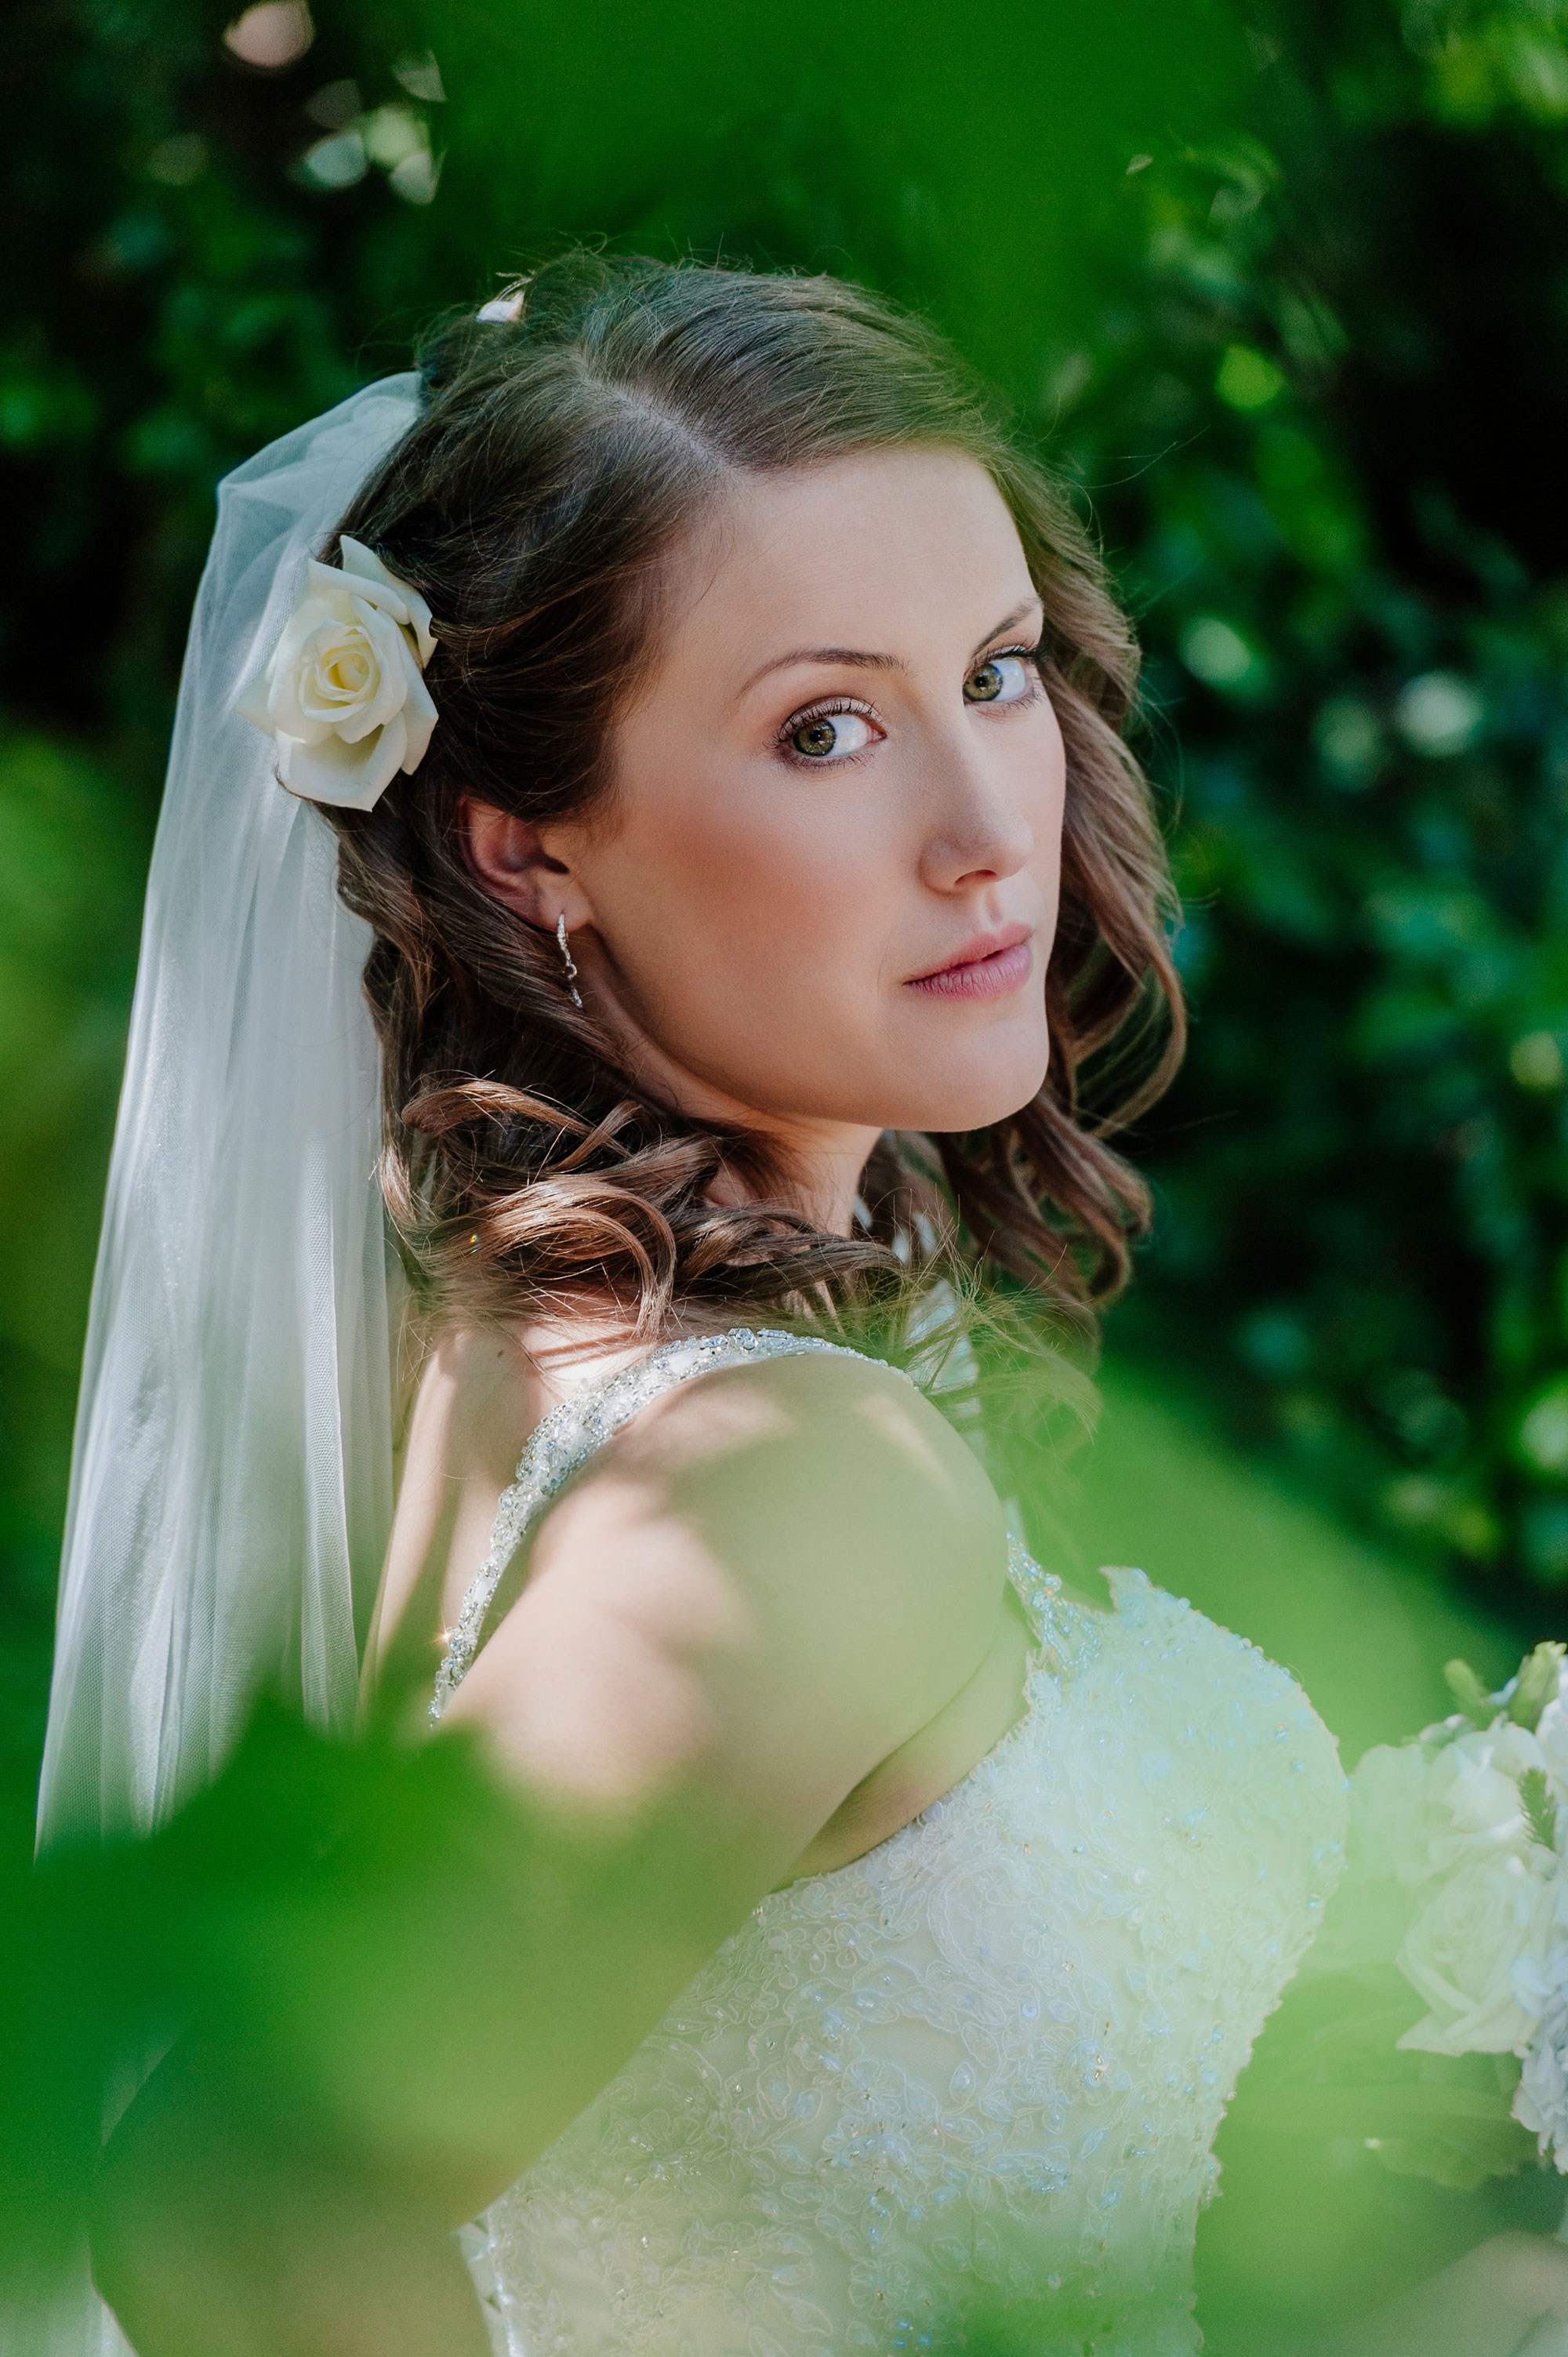 Gorgeous Sydney bride Chloe